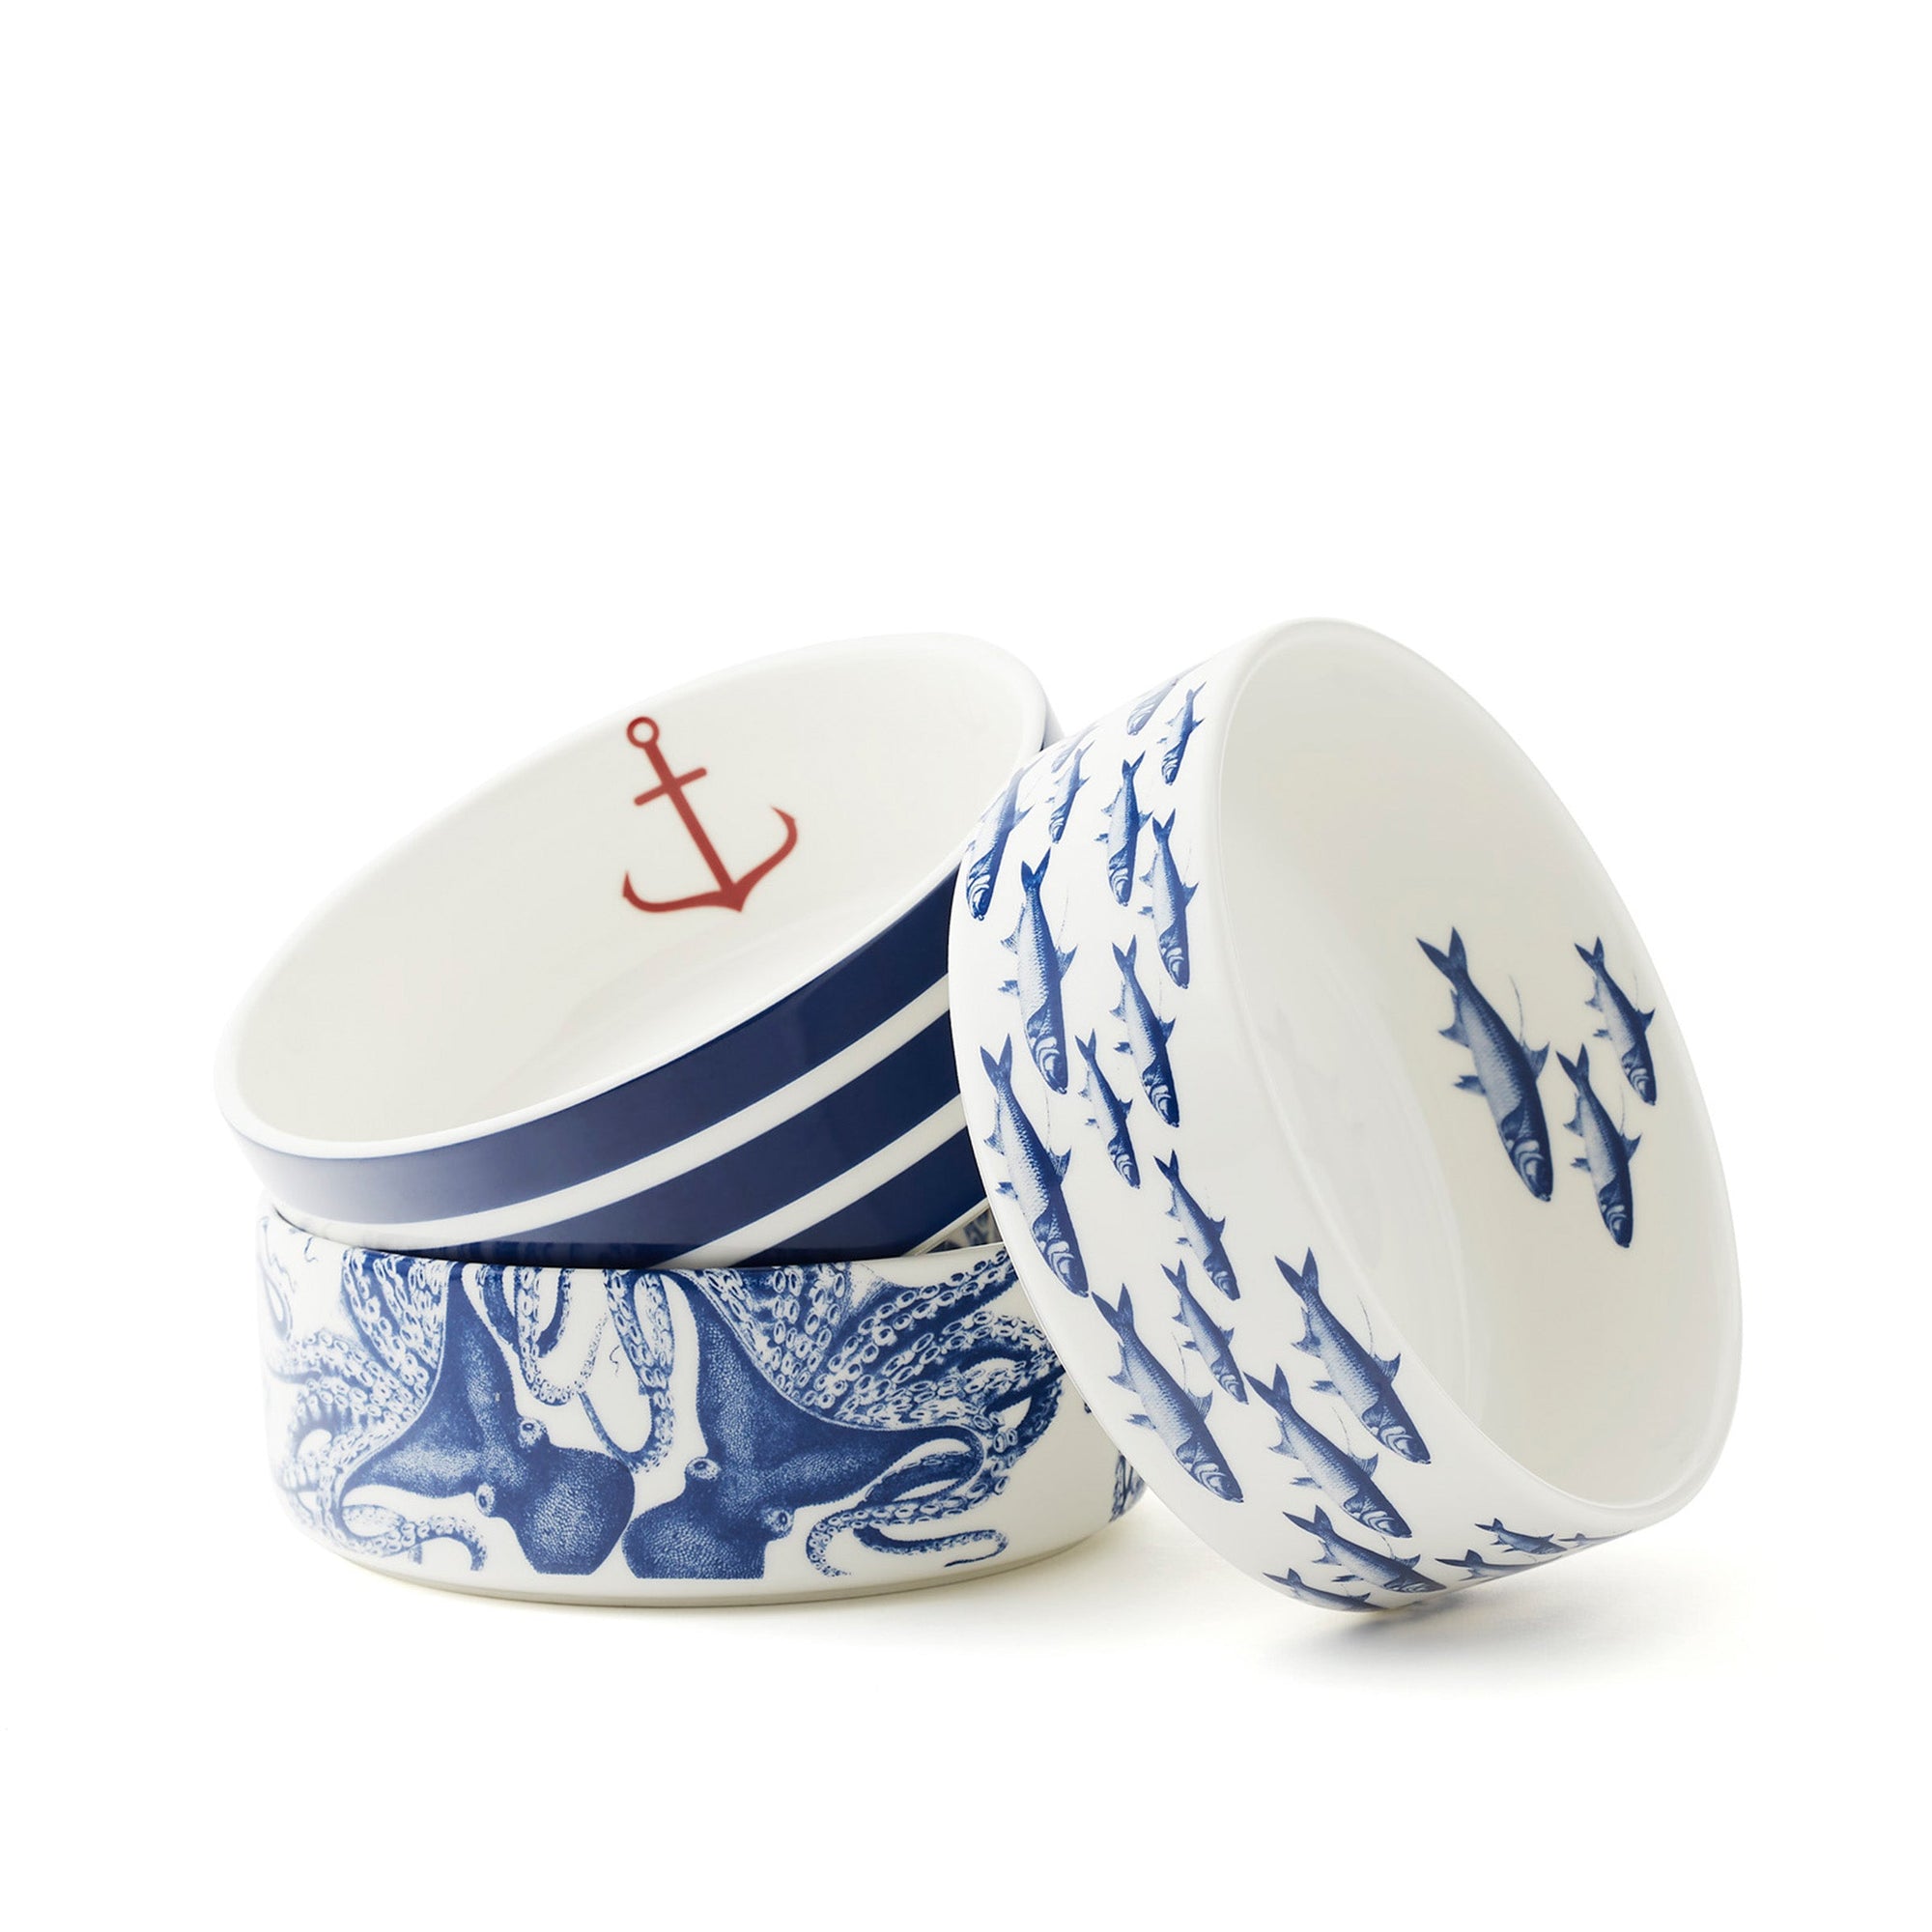 Beach Towel Stripe blue and white premium porcelain medium pet bowl from Caskata.